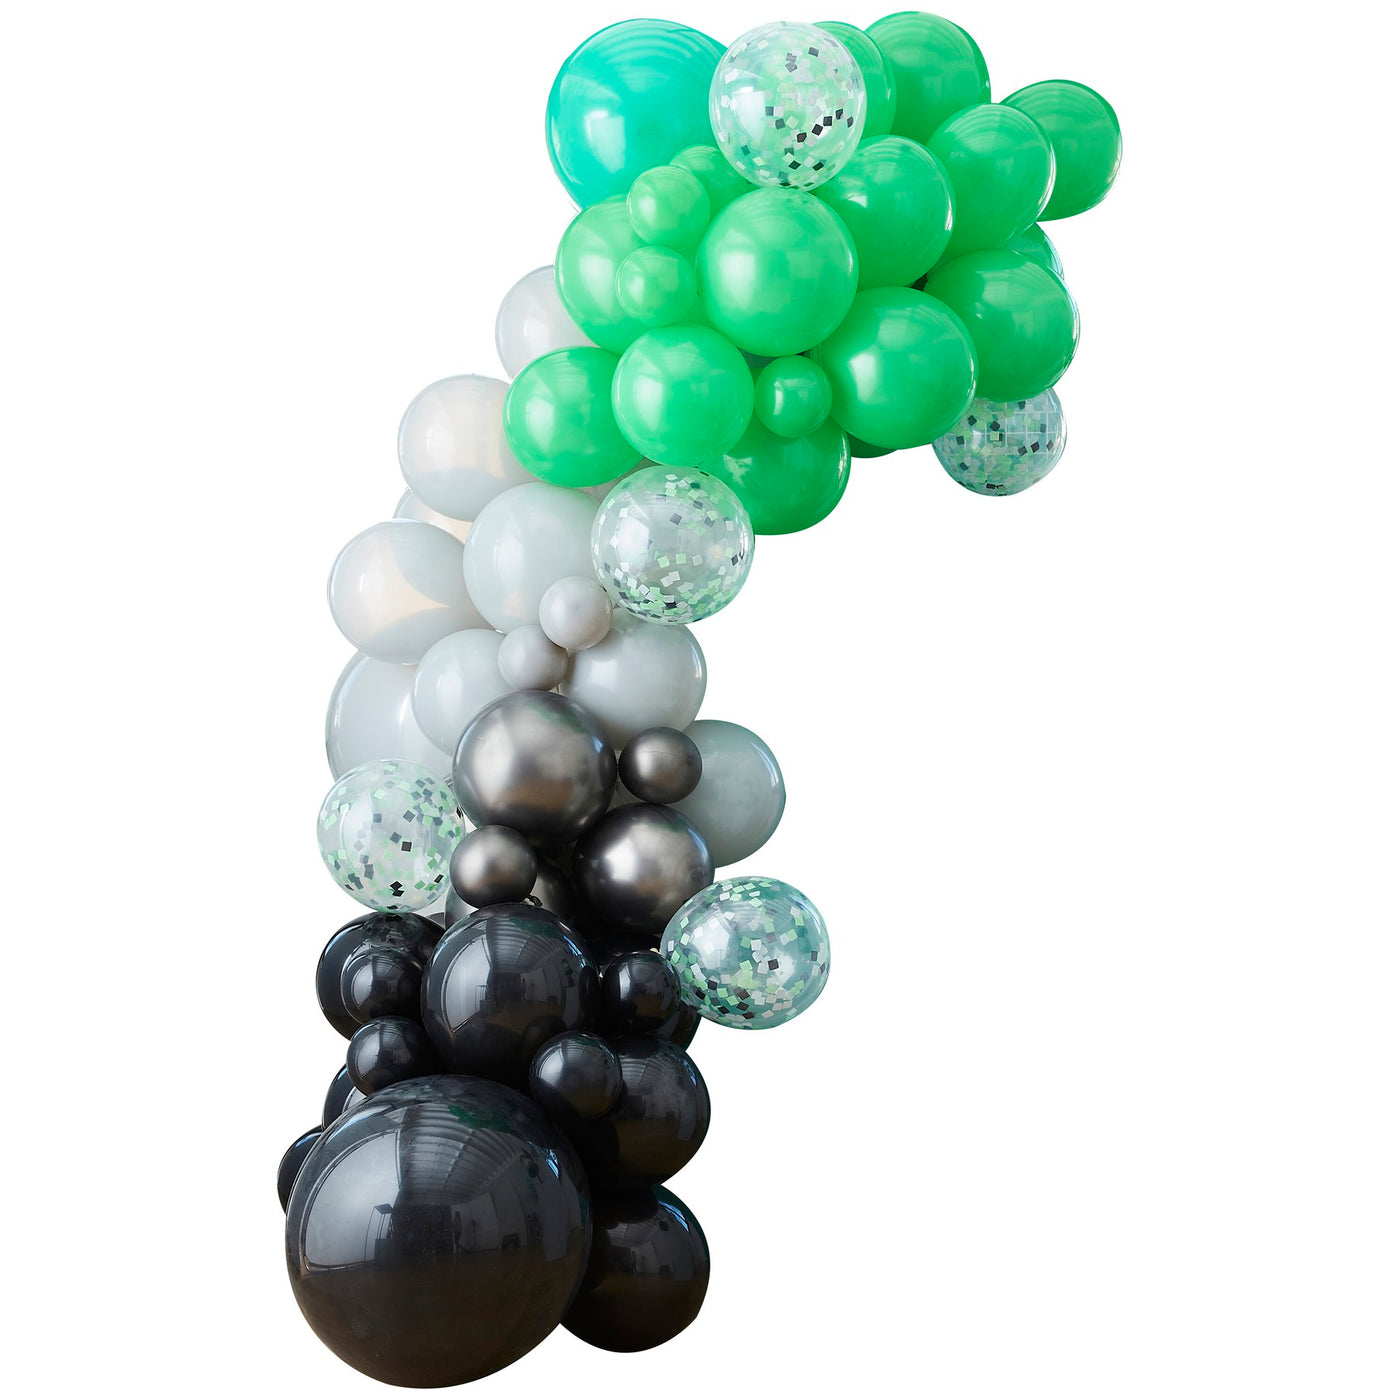 Ballon Girlande, schwarz-grau-grün, Game On, DIY, 70 Ballone inkl. 5m Ballonband